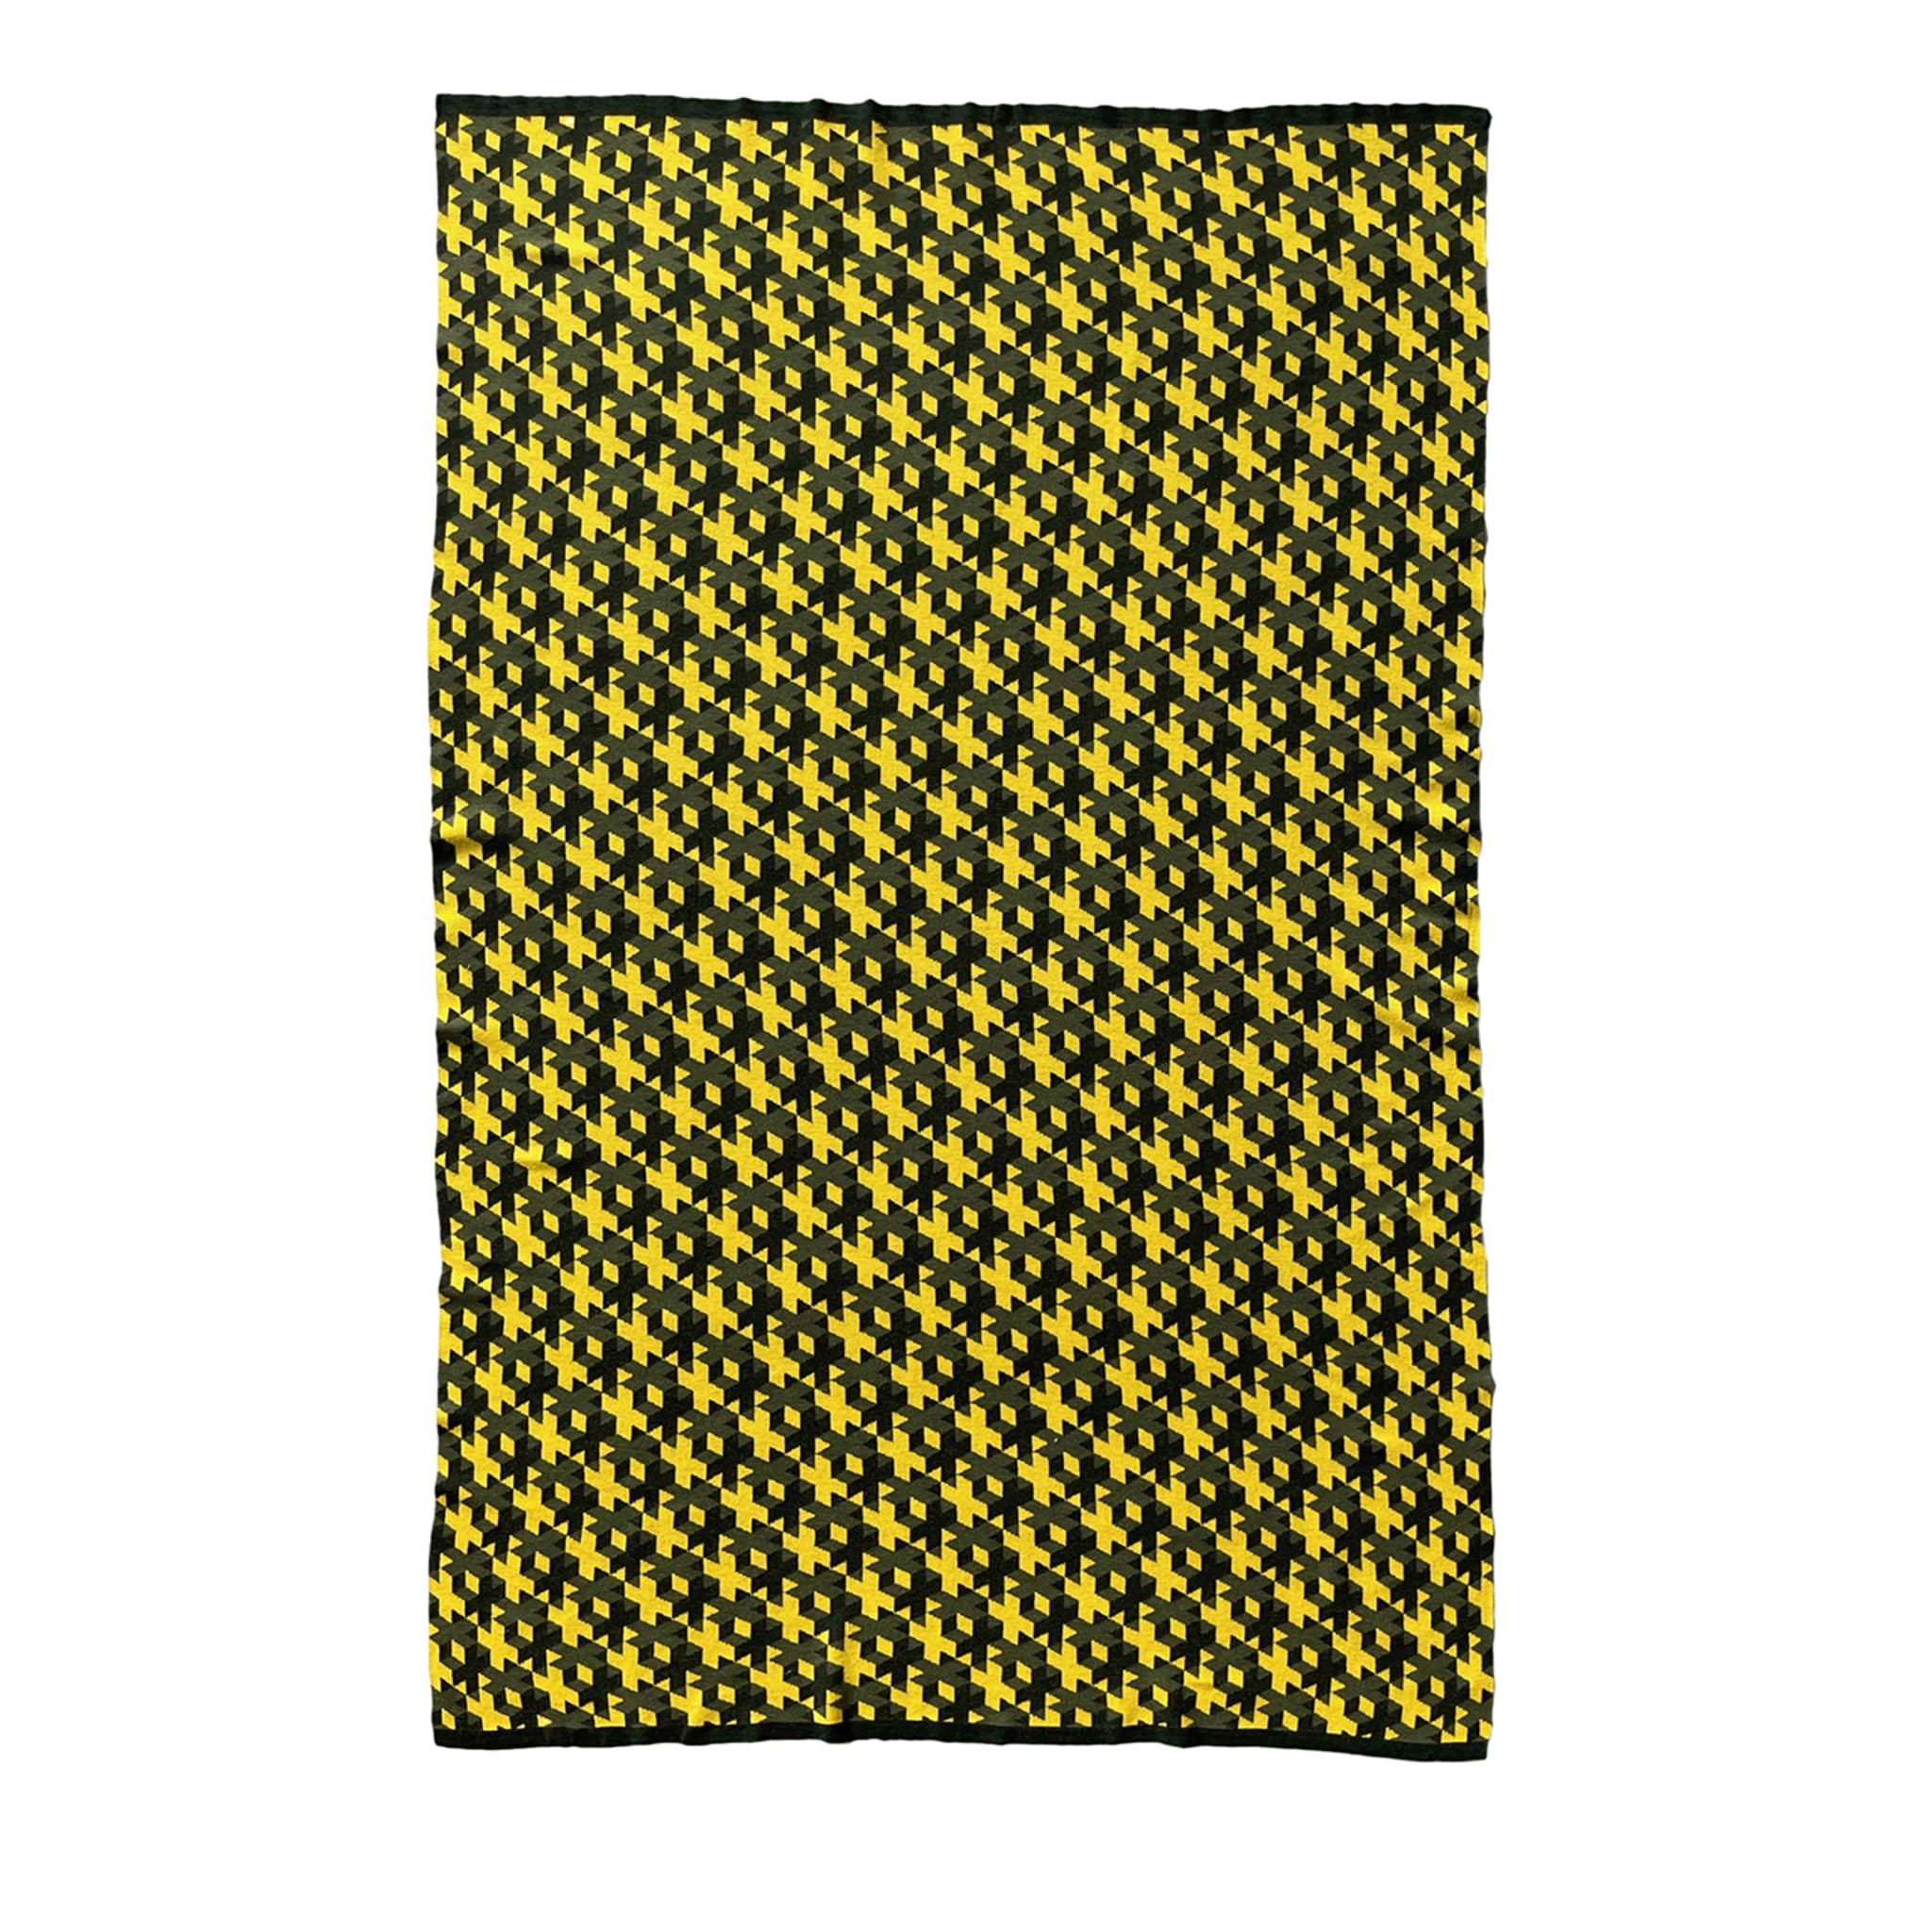 Plaid Lana 01 Patterned Yellow & Gray Blanket by Giulio Iacchetti - Main view